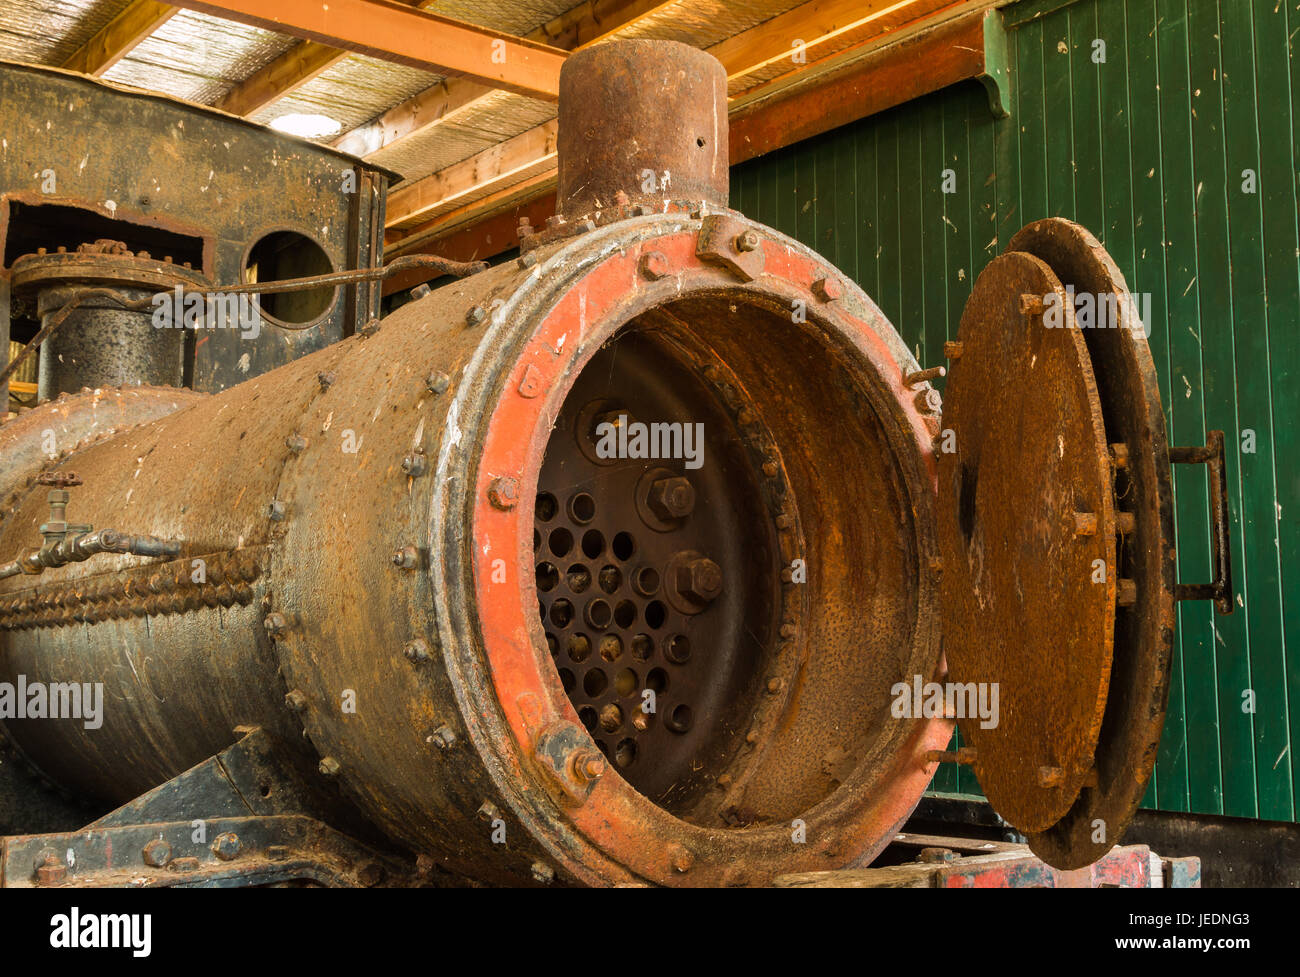 als je kunt Verwoesting Opsplitsen Looking inside and old steam engine train boiler Stock Photo - Alamy